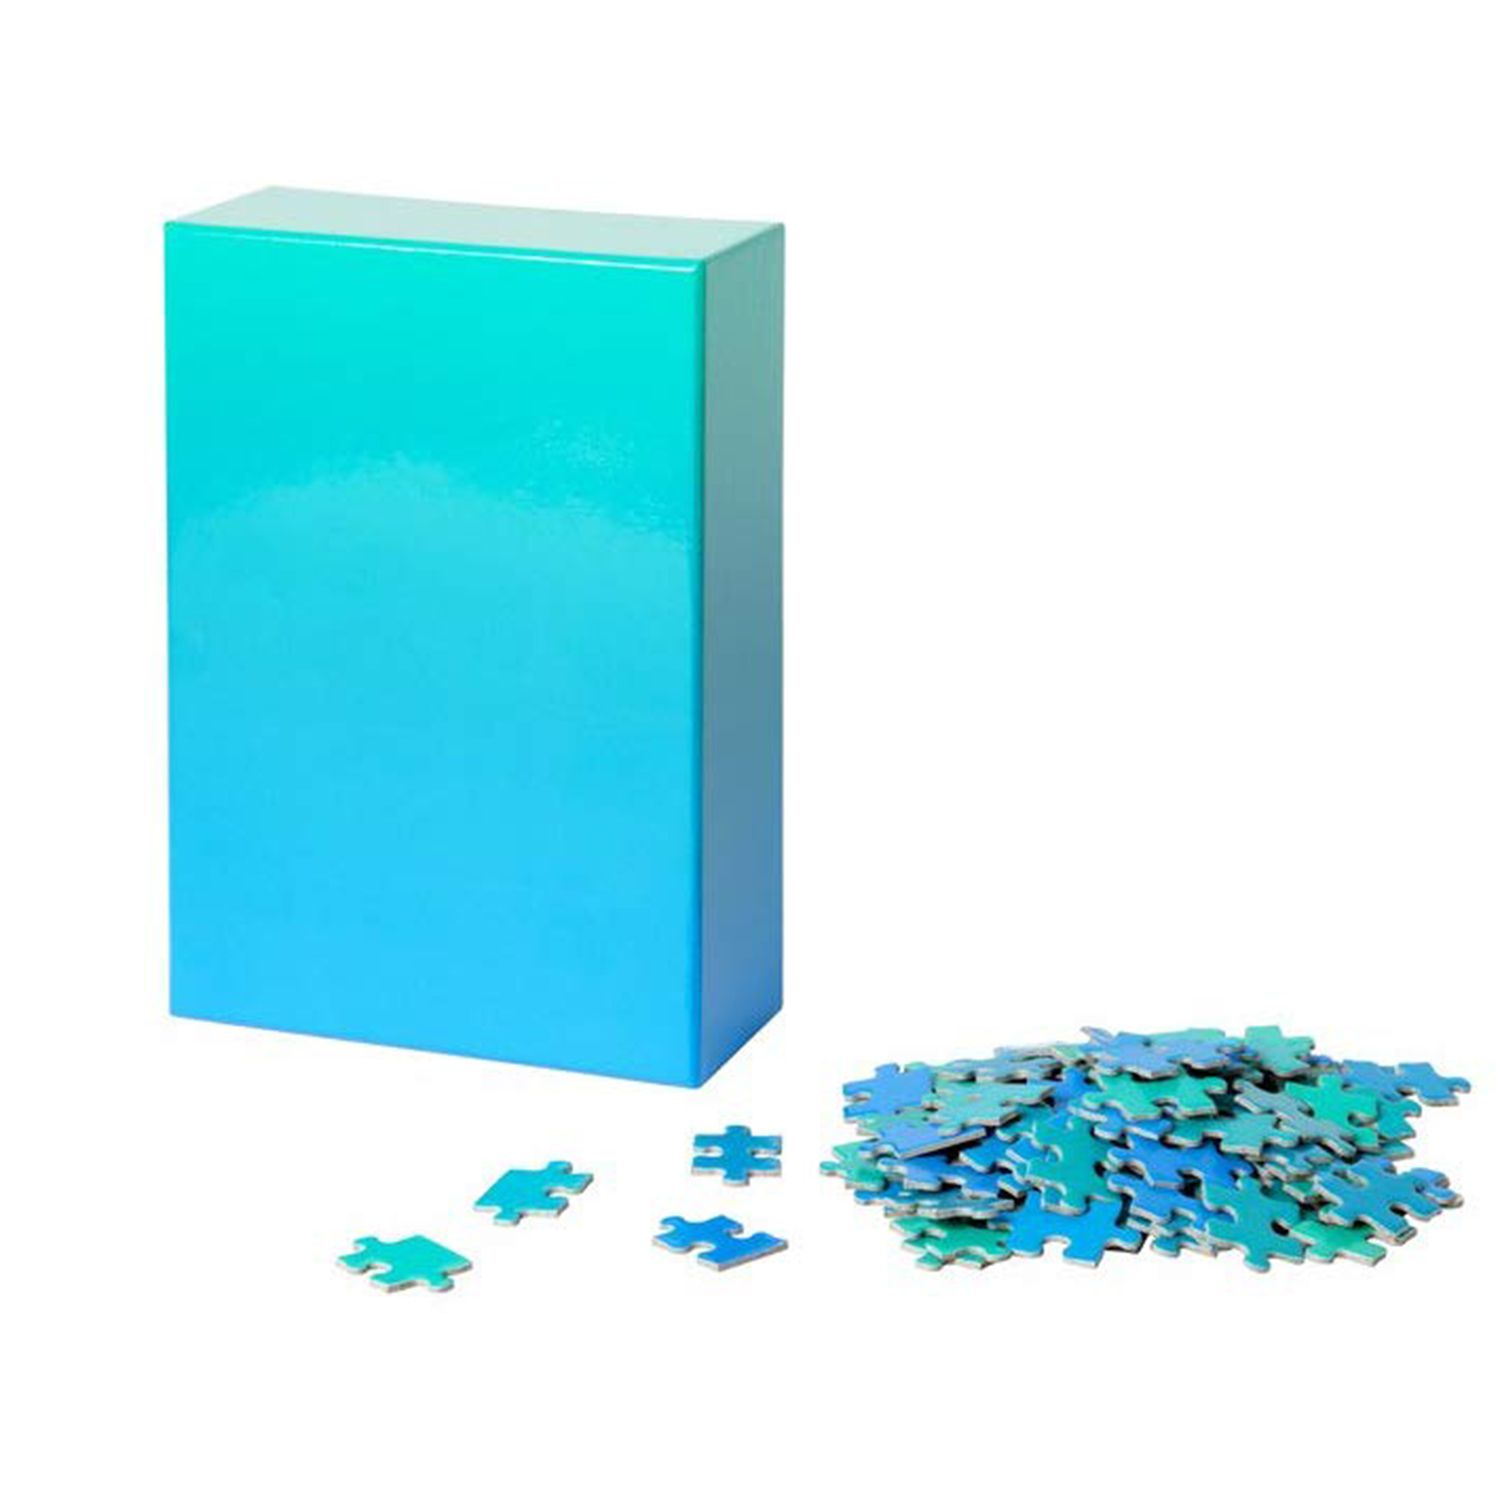 Puzzle degradado Areaware Azul / Verde